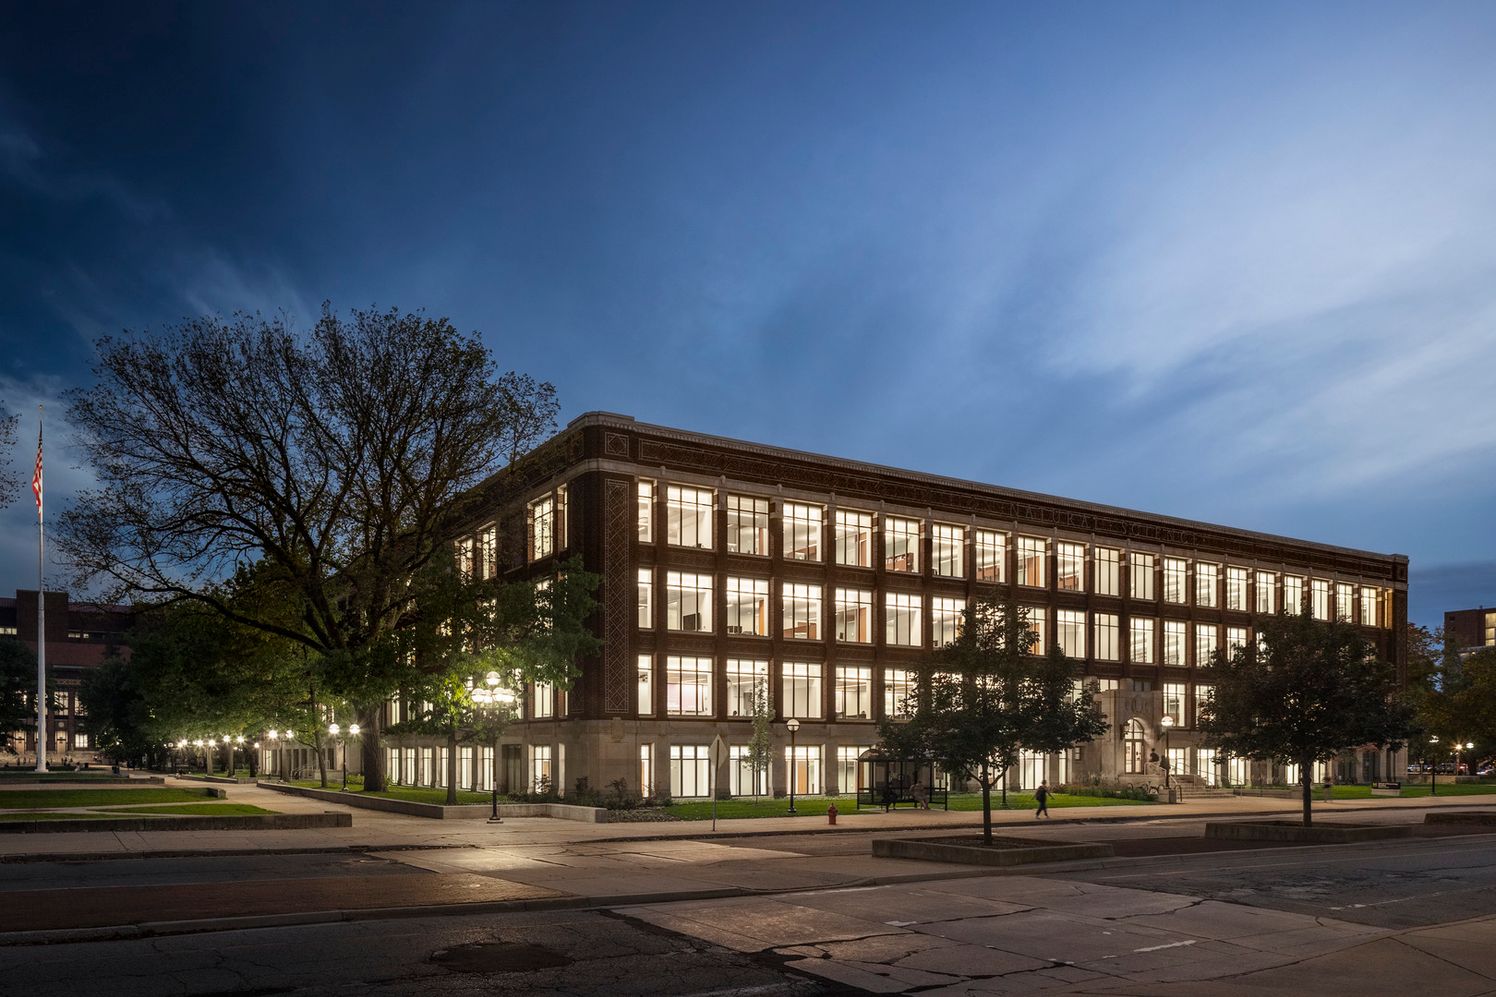 Exterior photos of University of Michigan's Kinesiology Building at night